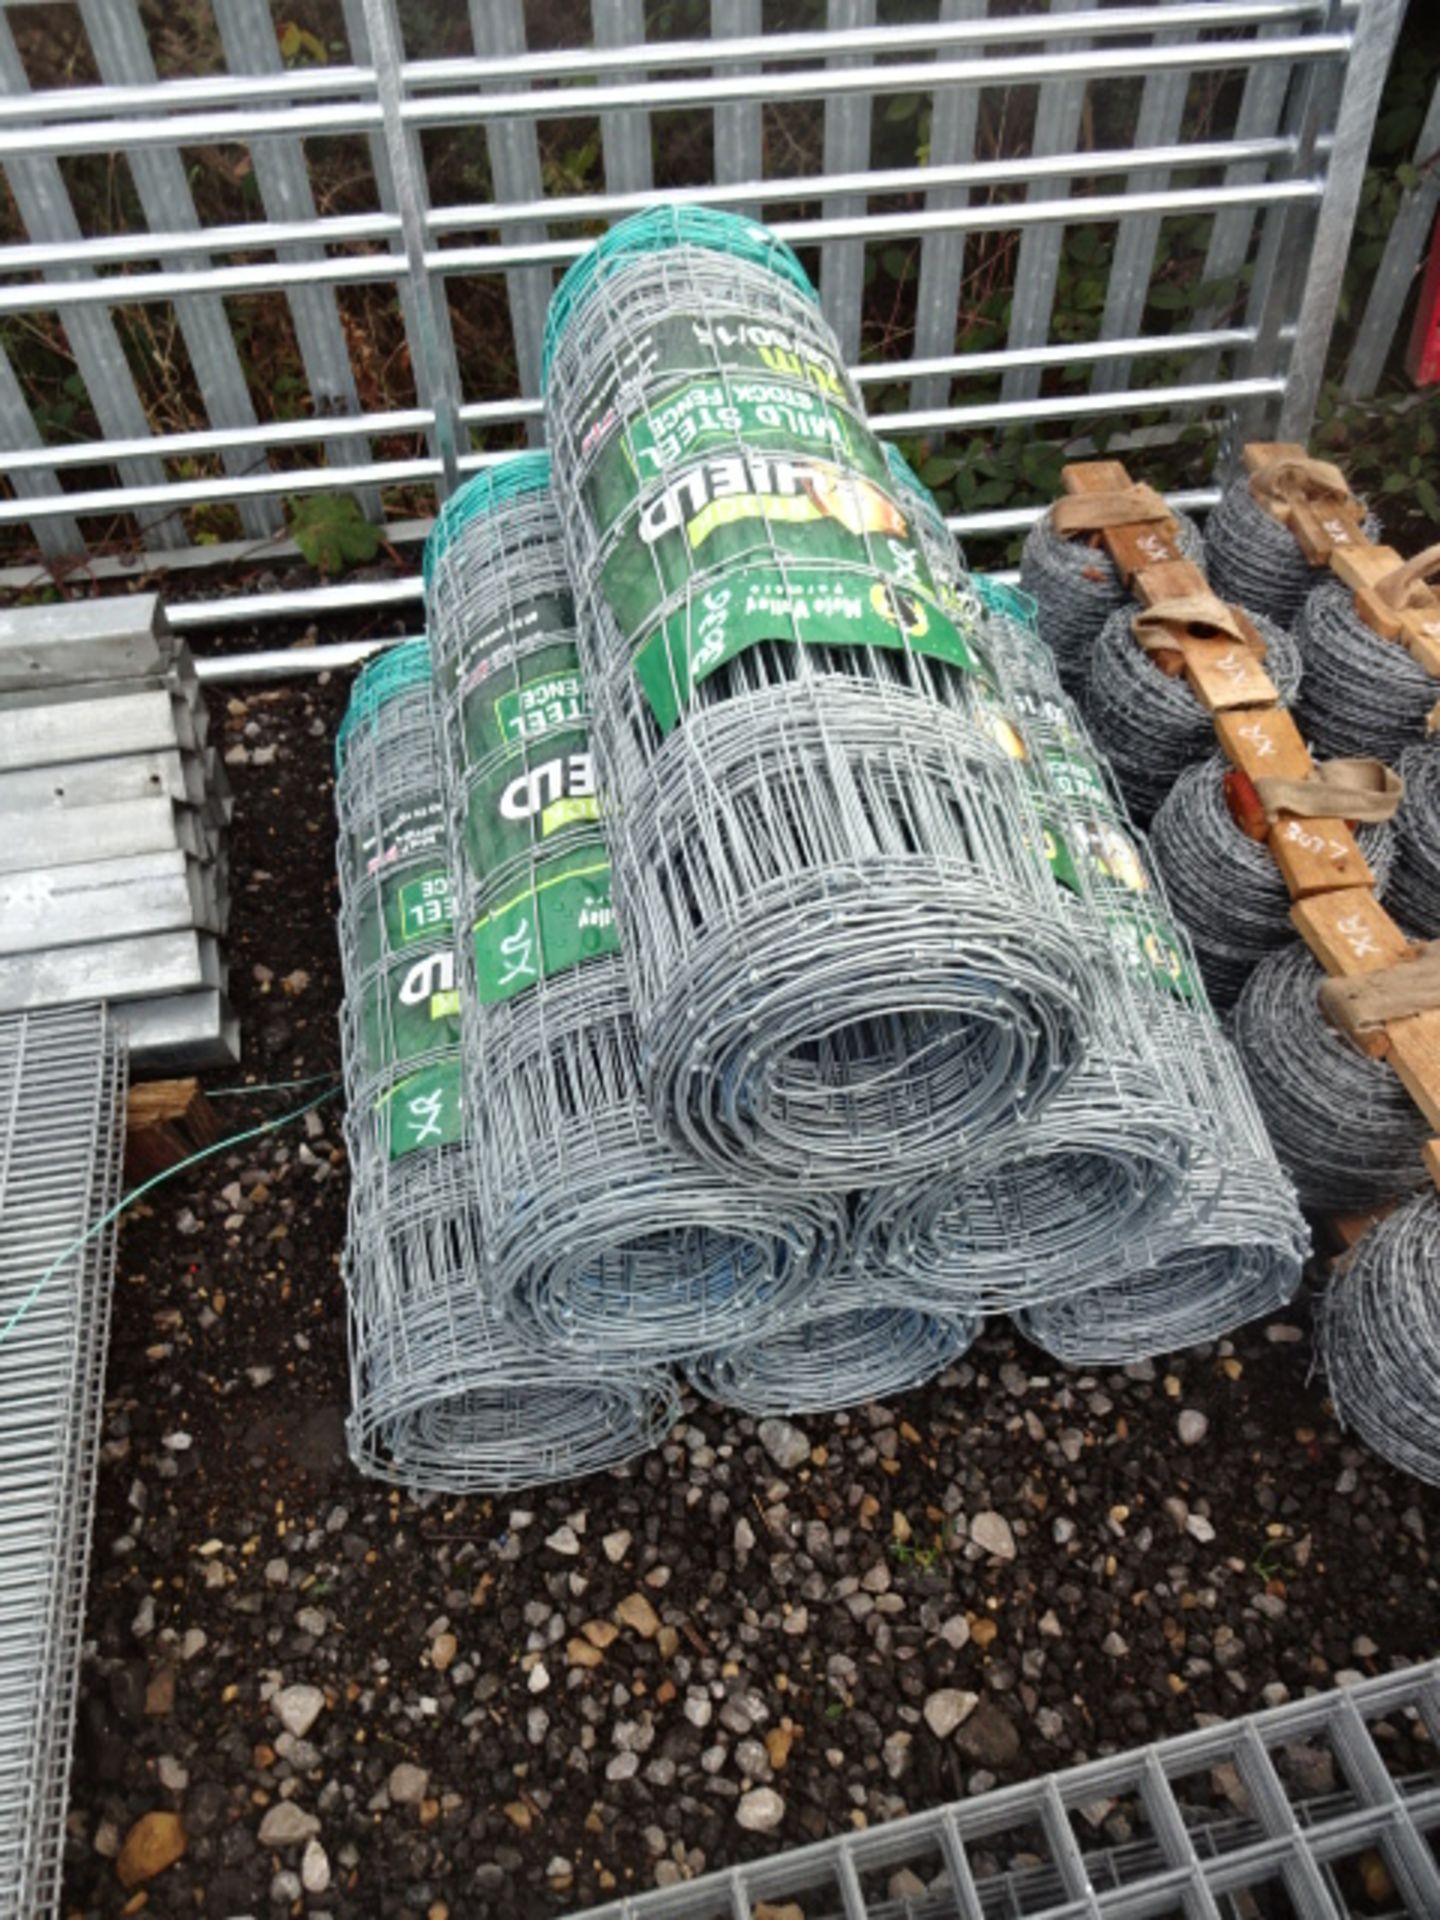 6 x rolls of stock netting